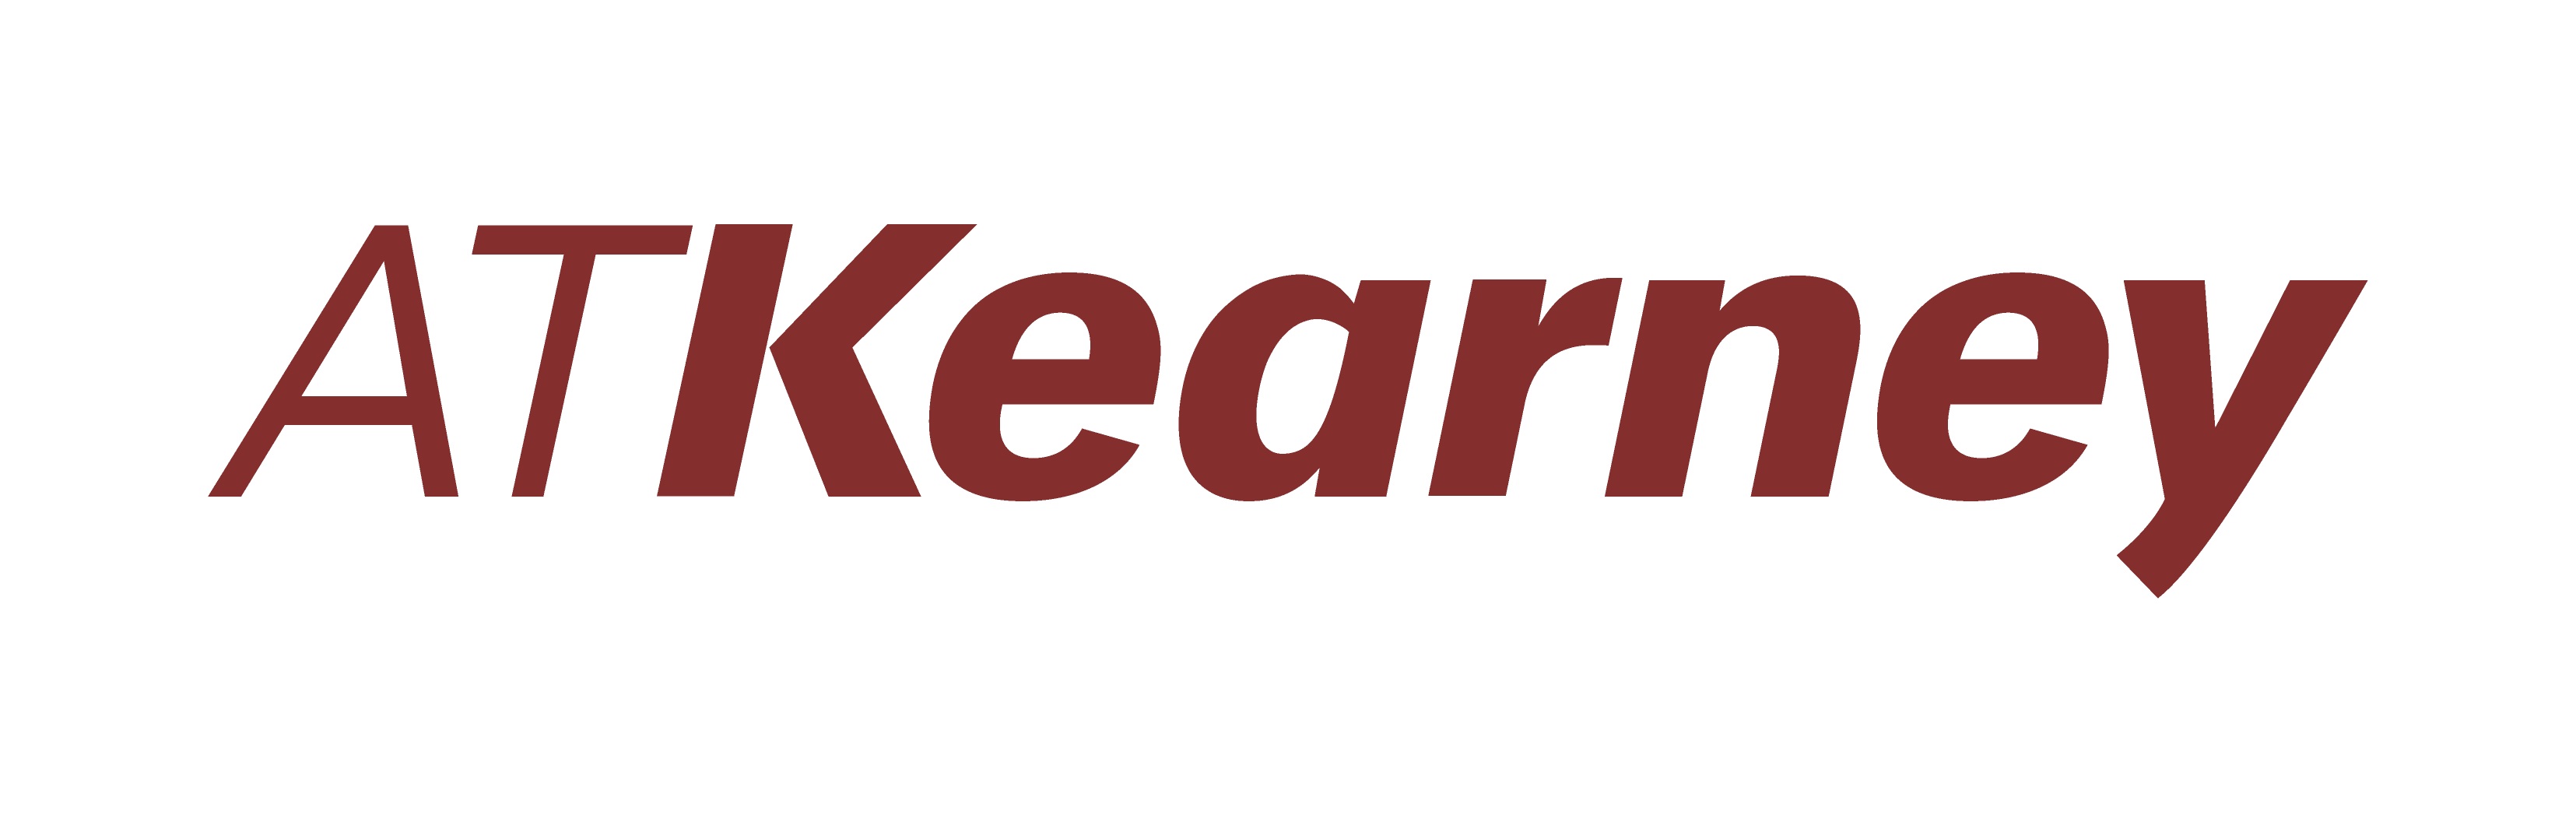 ATKearney-Logo